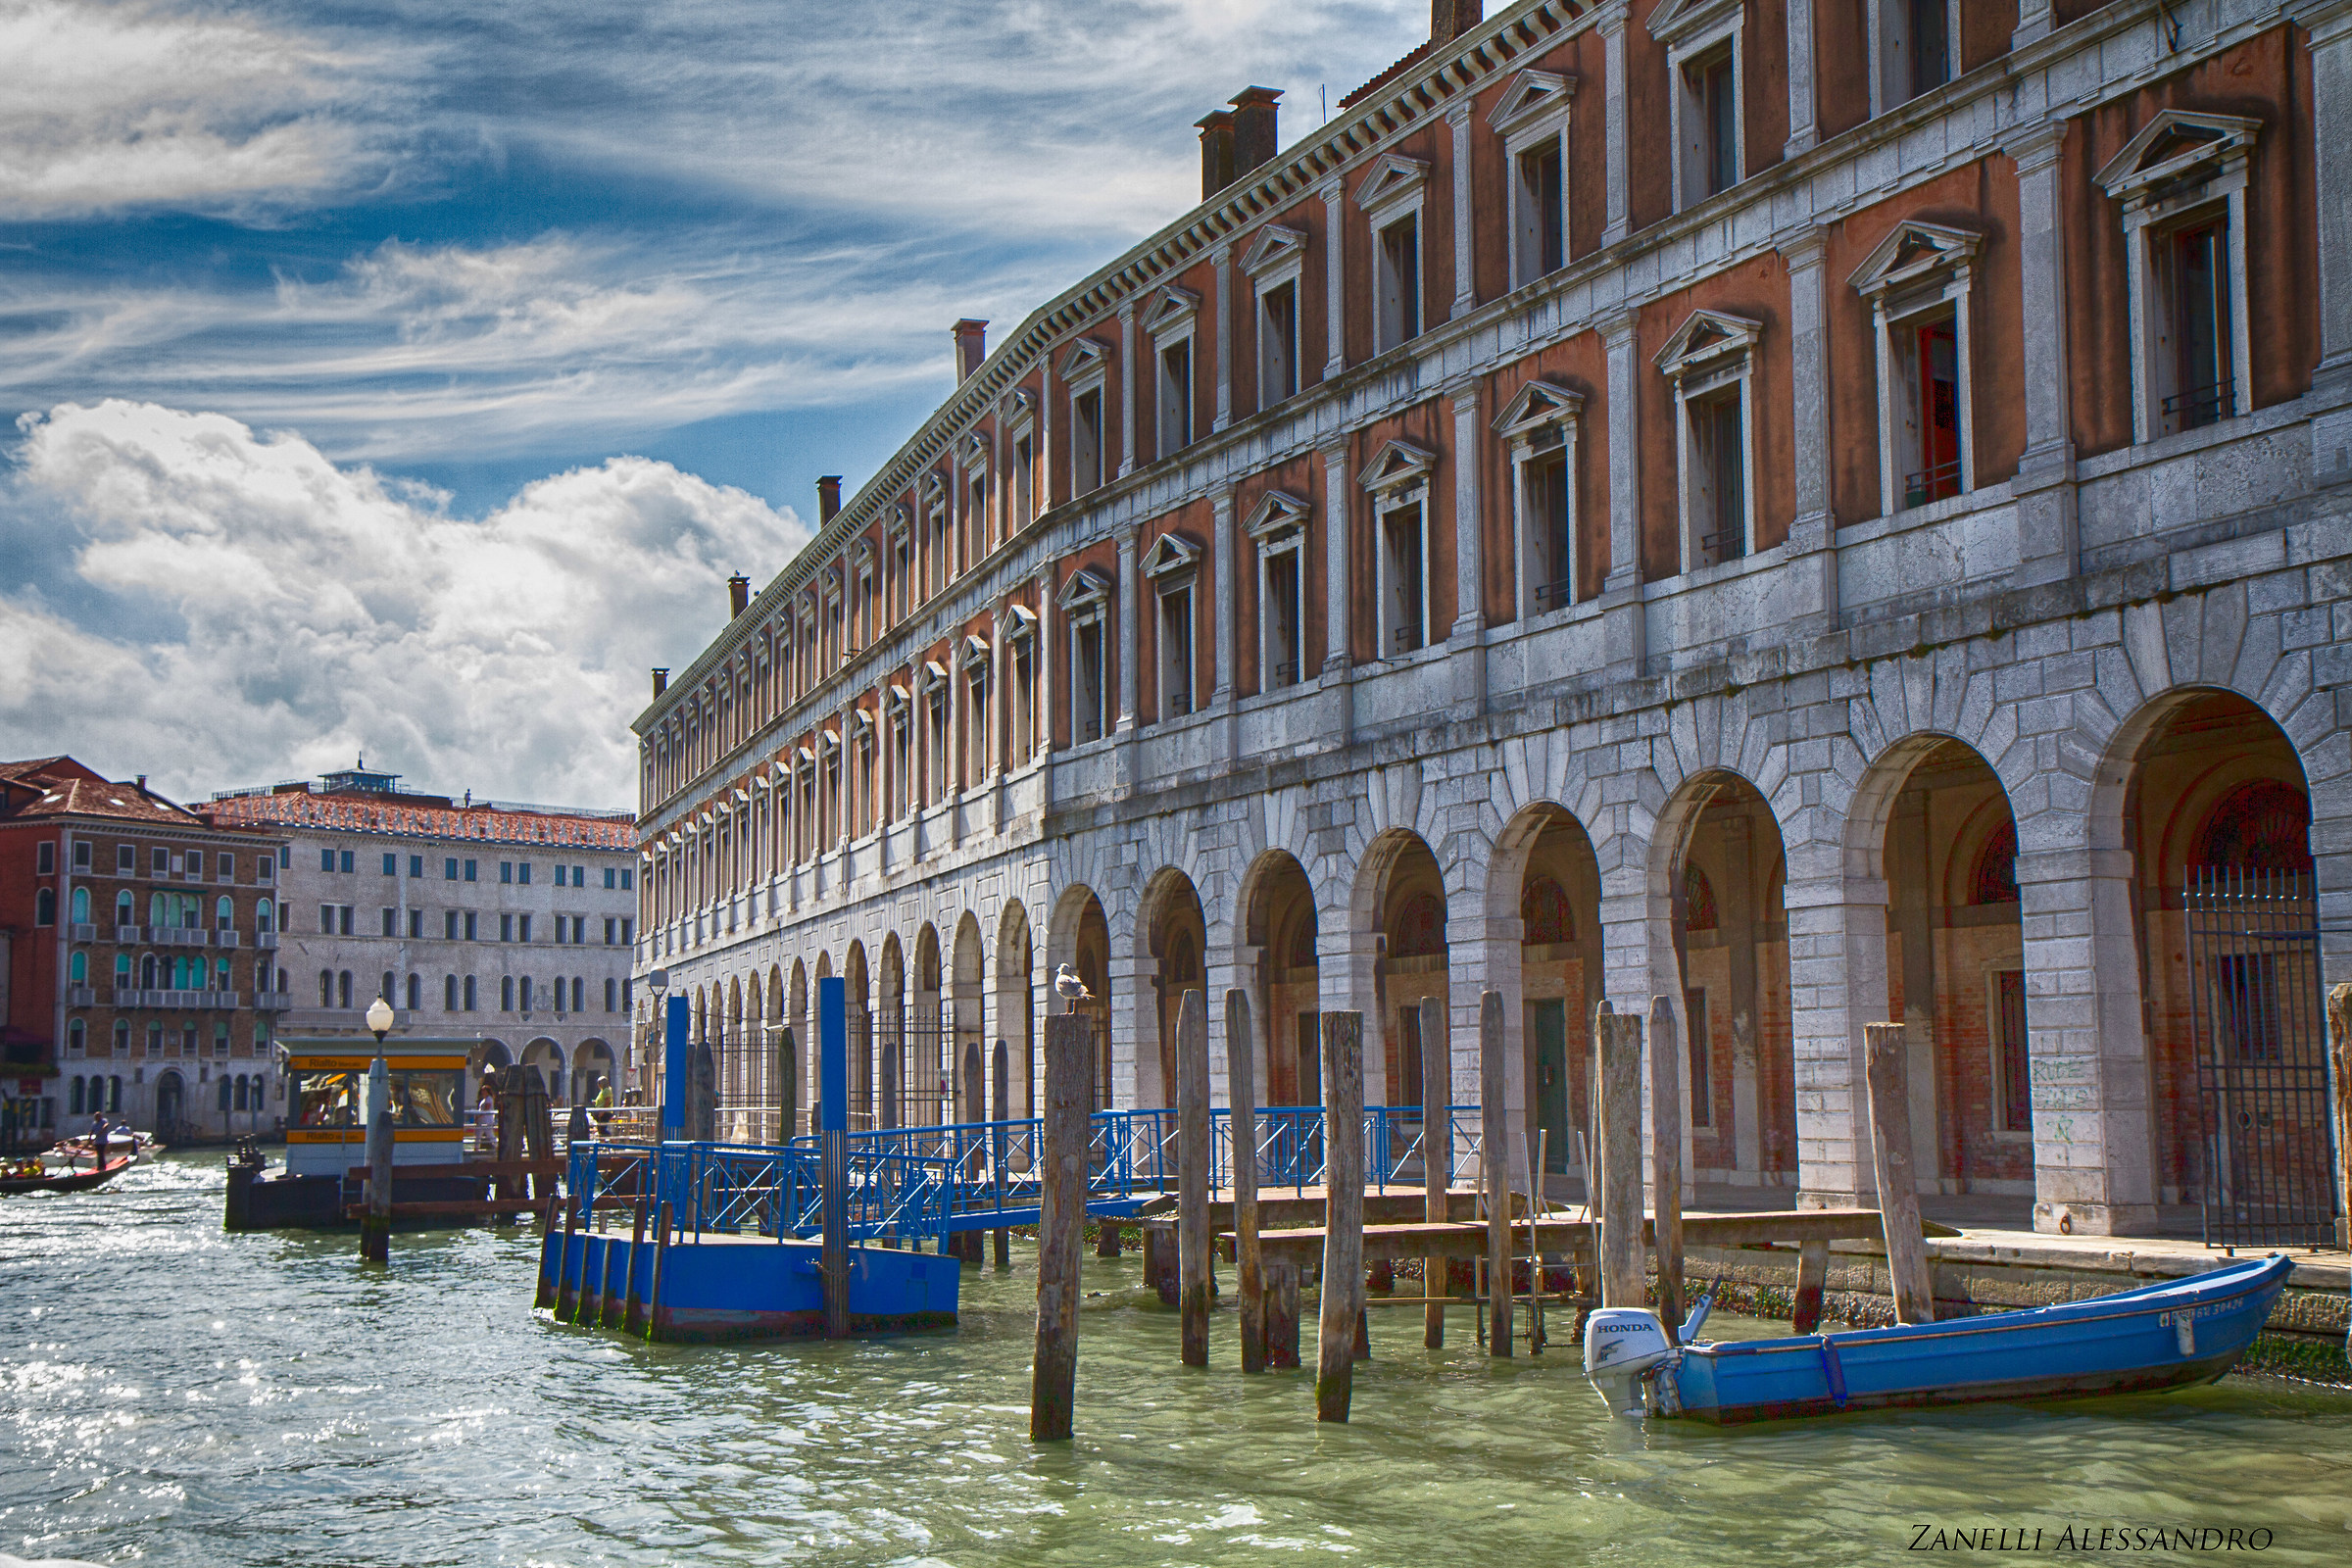 Venice and its arcades...